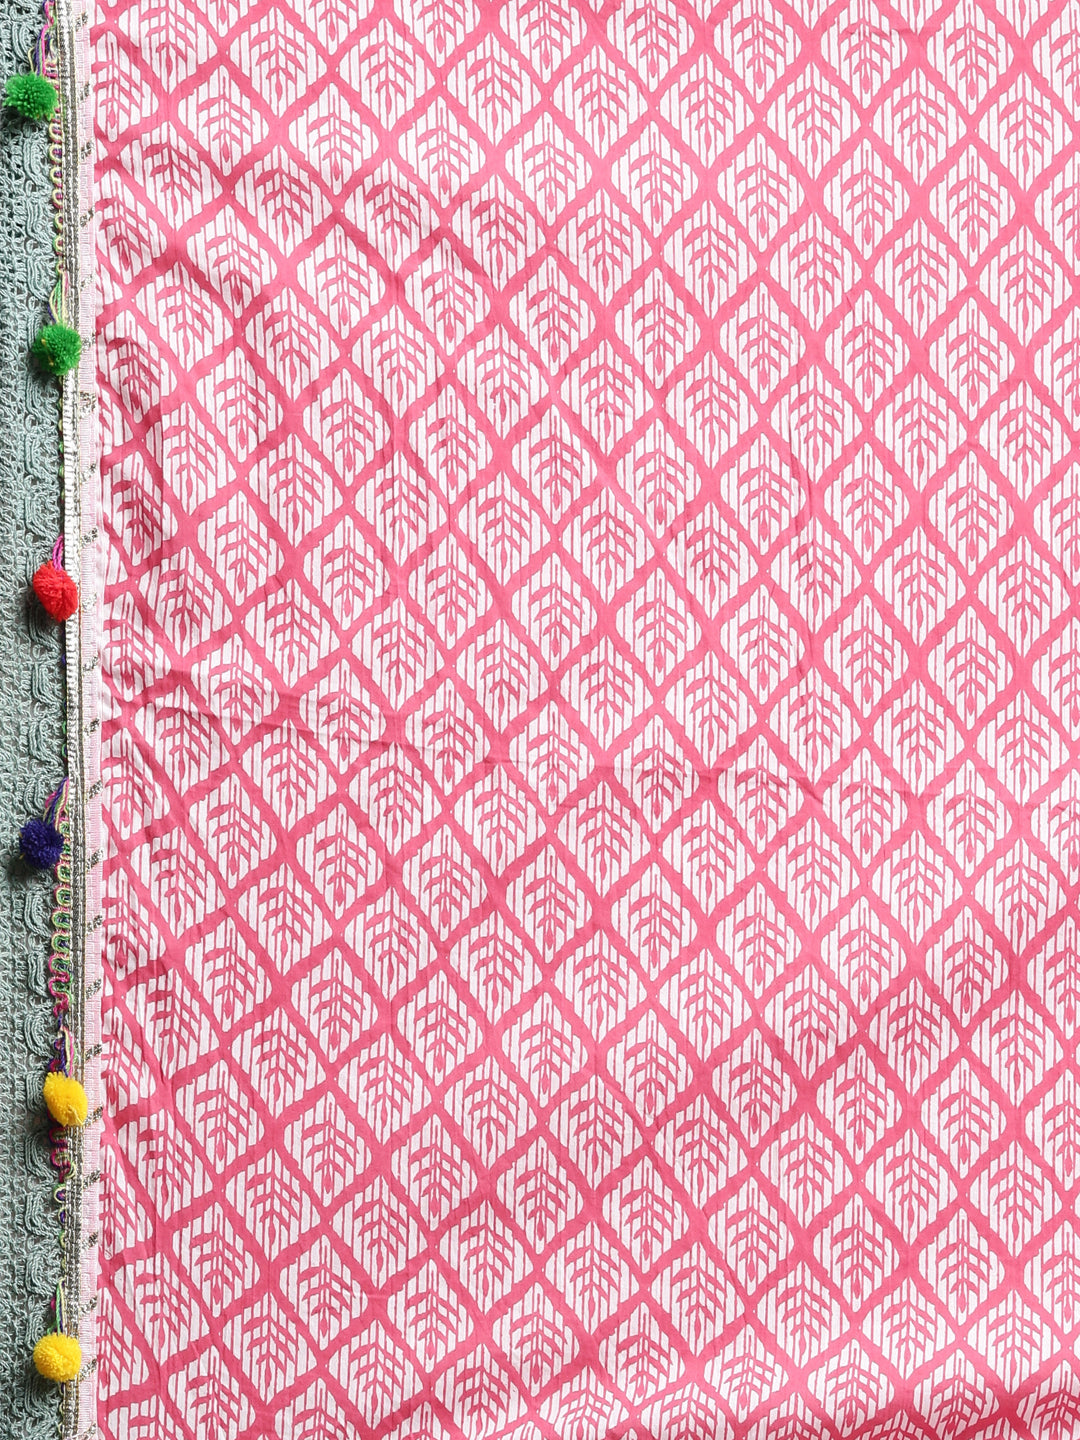 Neeru's Pink Color Jute Cotton Fabric Kurta Sets With Dupatta